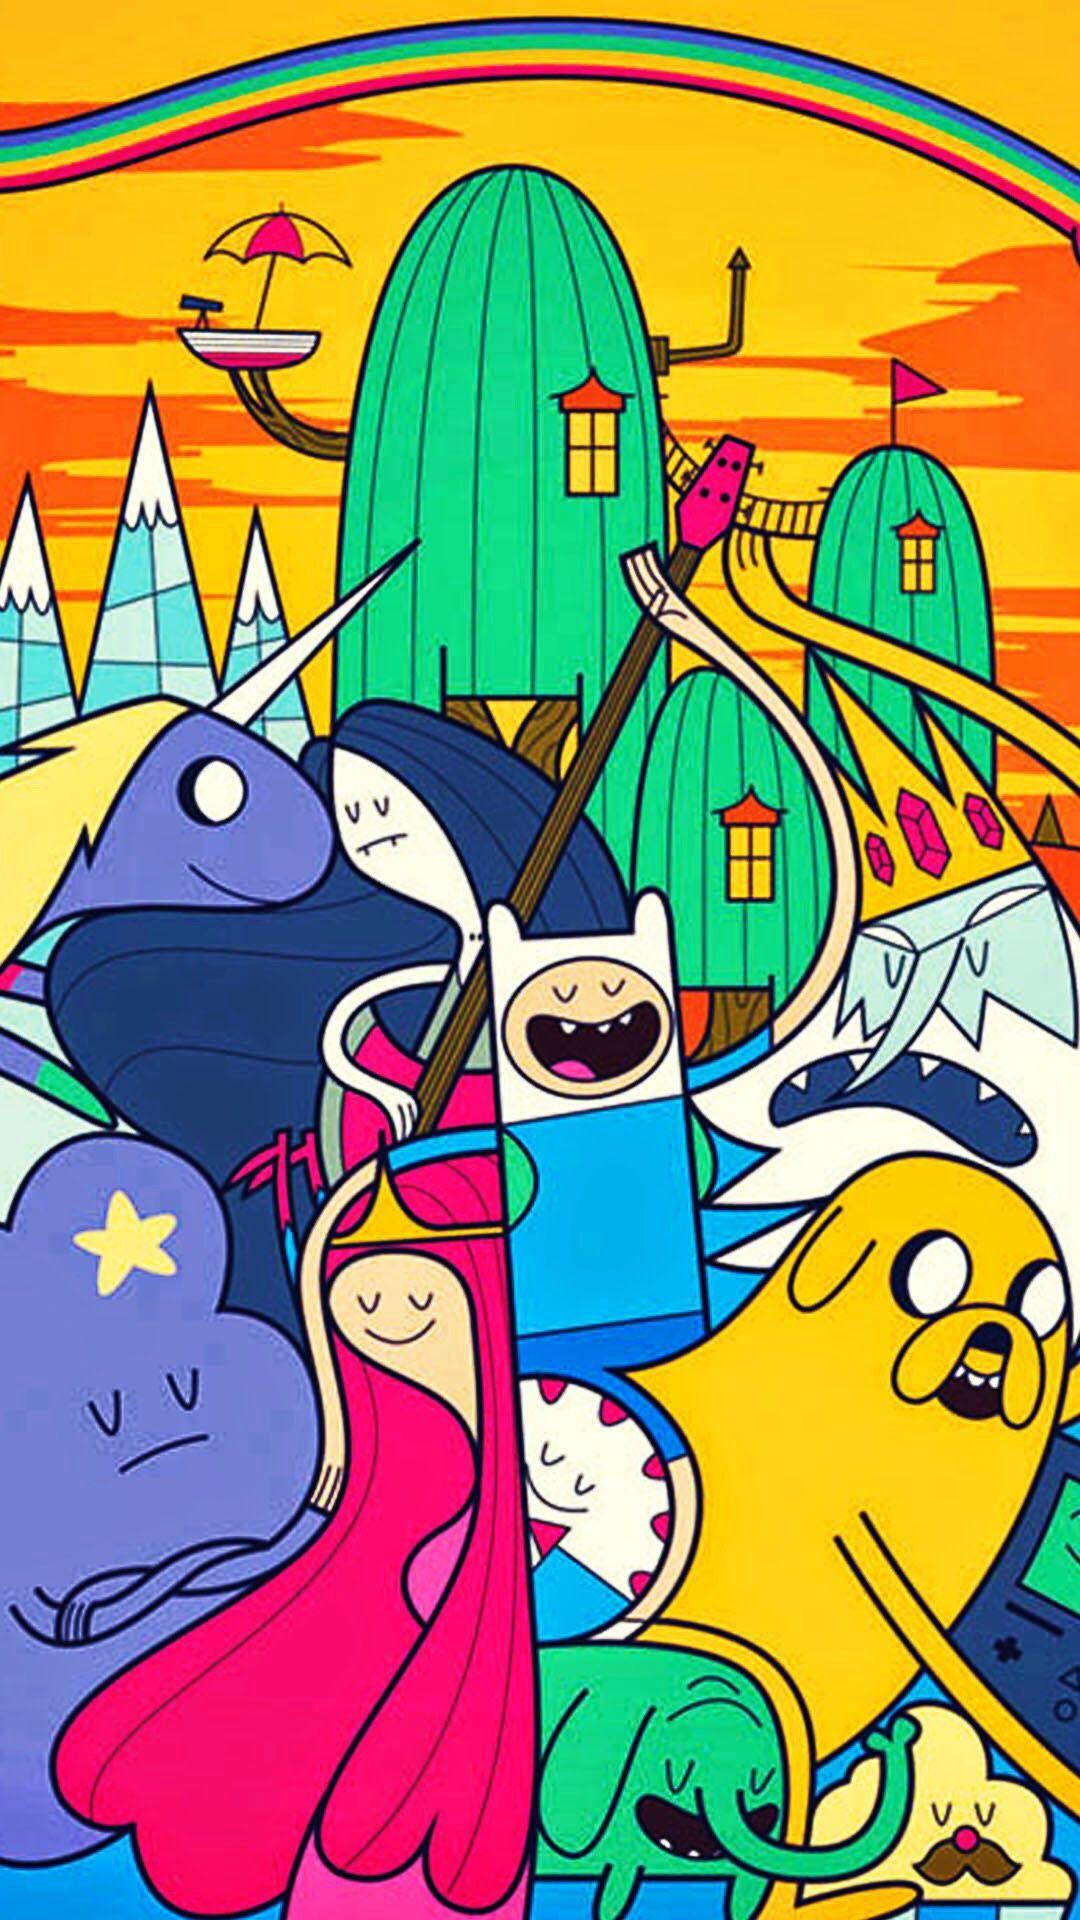 Adventure Time Wallpaper for iPhone iPhone 7 plus, iPhone 6 plus